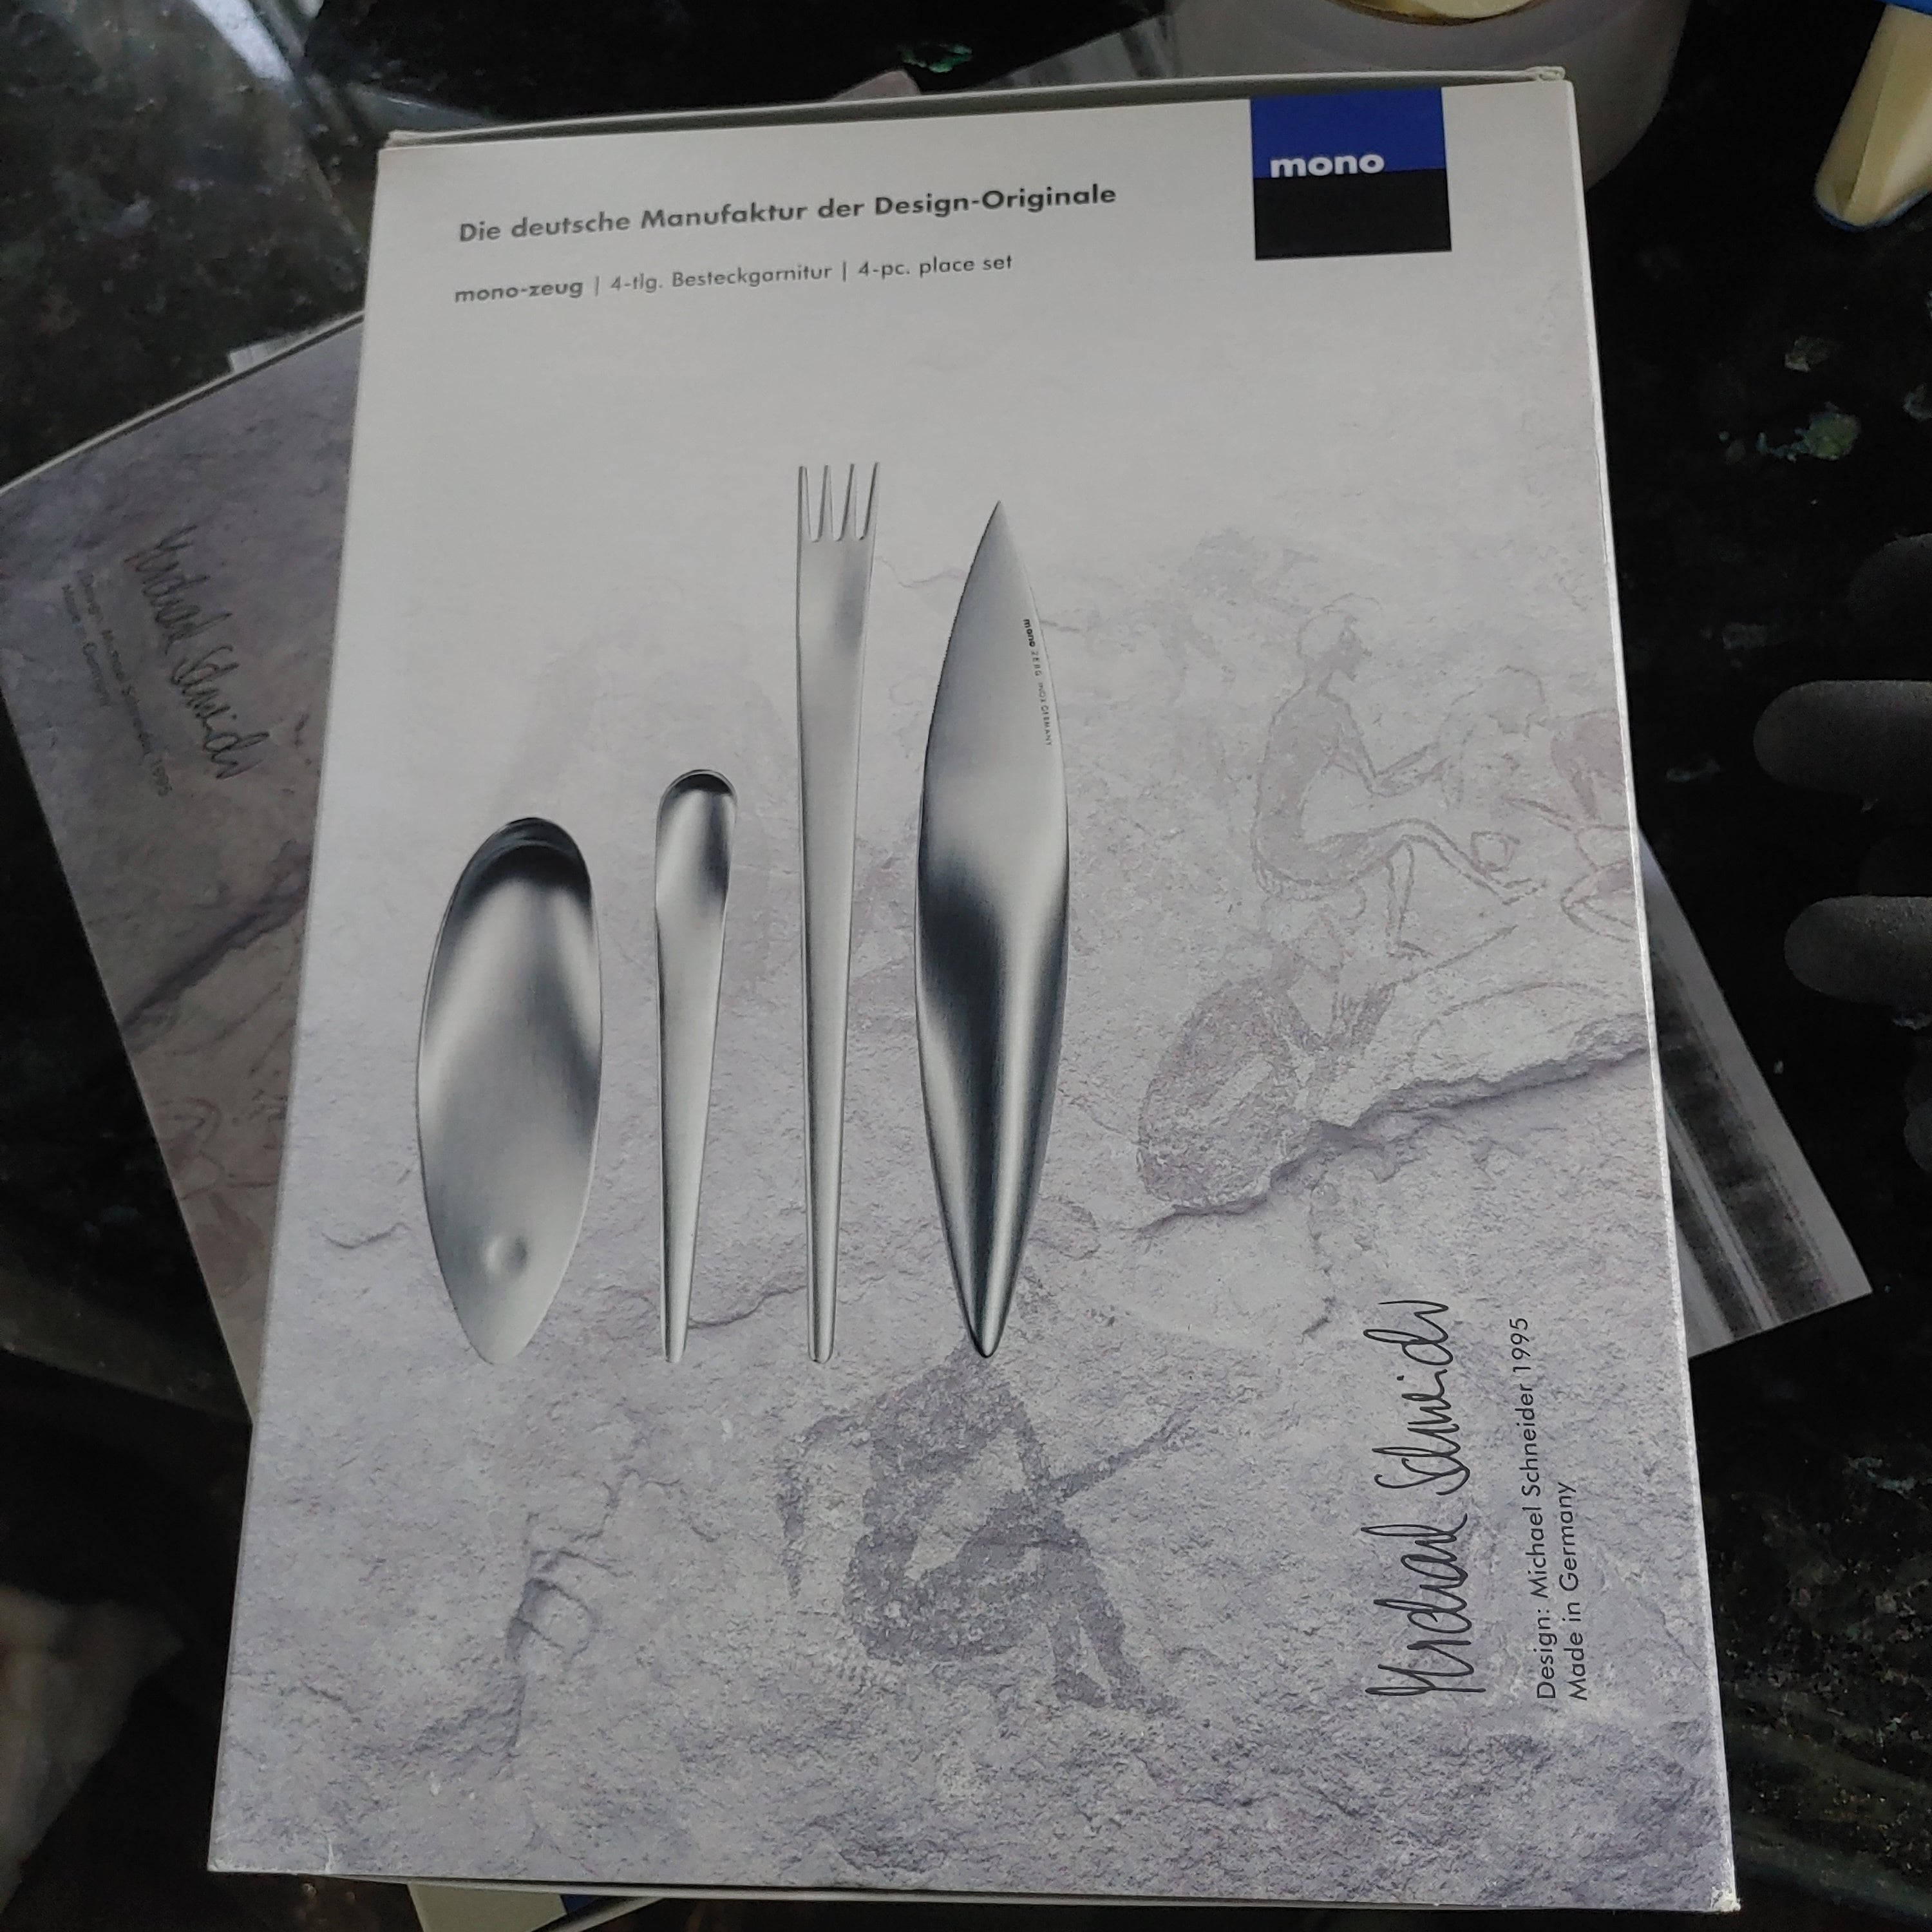 Mono Zeug - Stainless Steel Flatware Set in Box, 4pc Cutlery